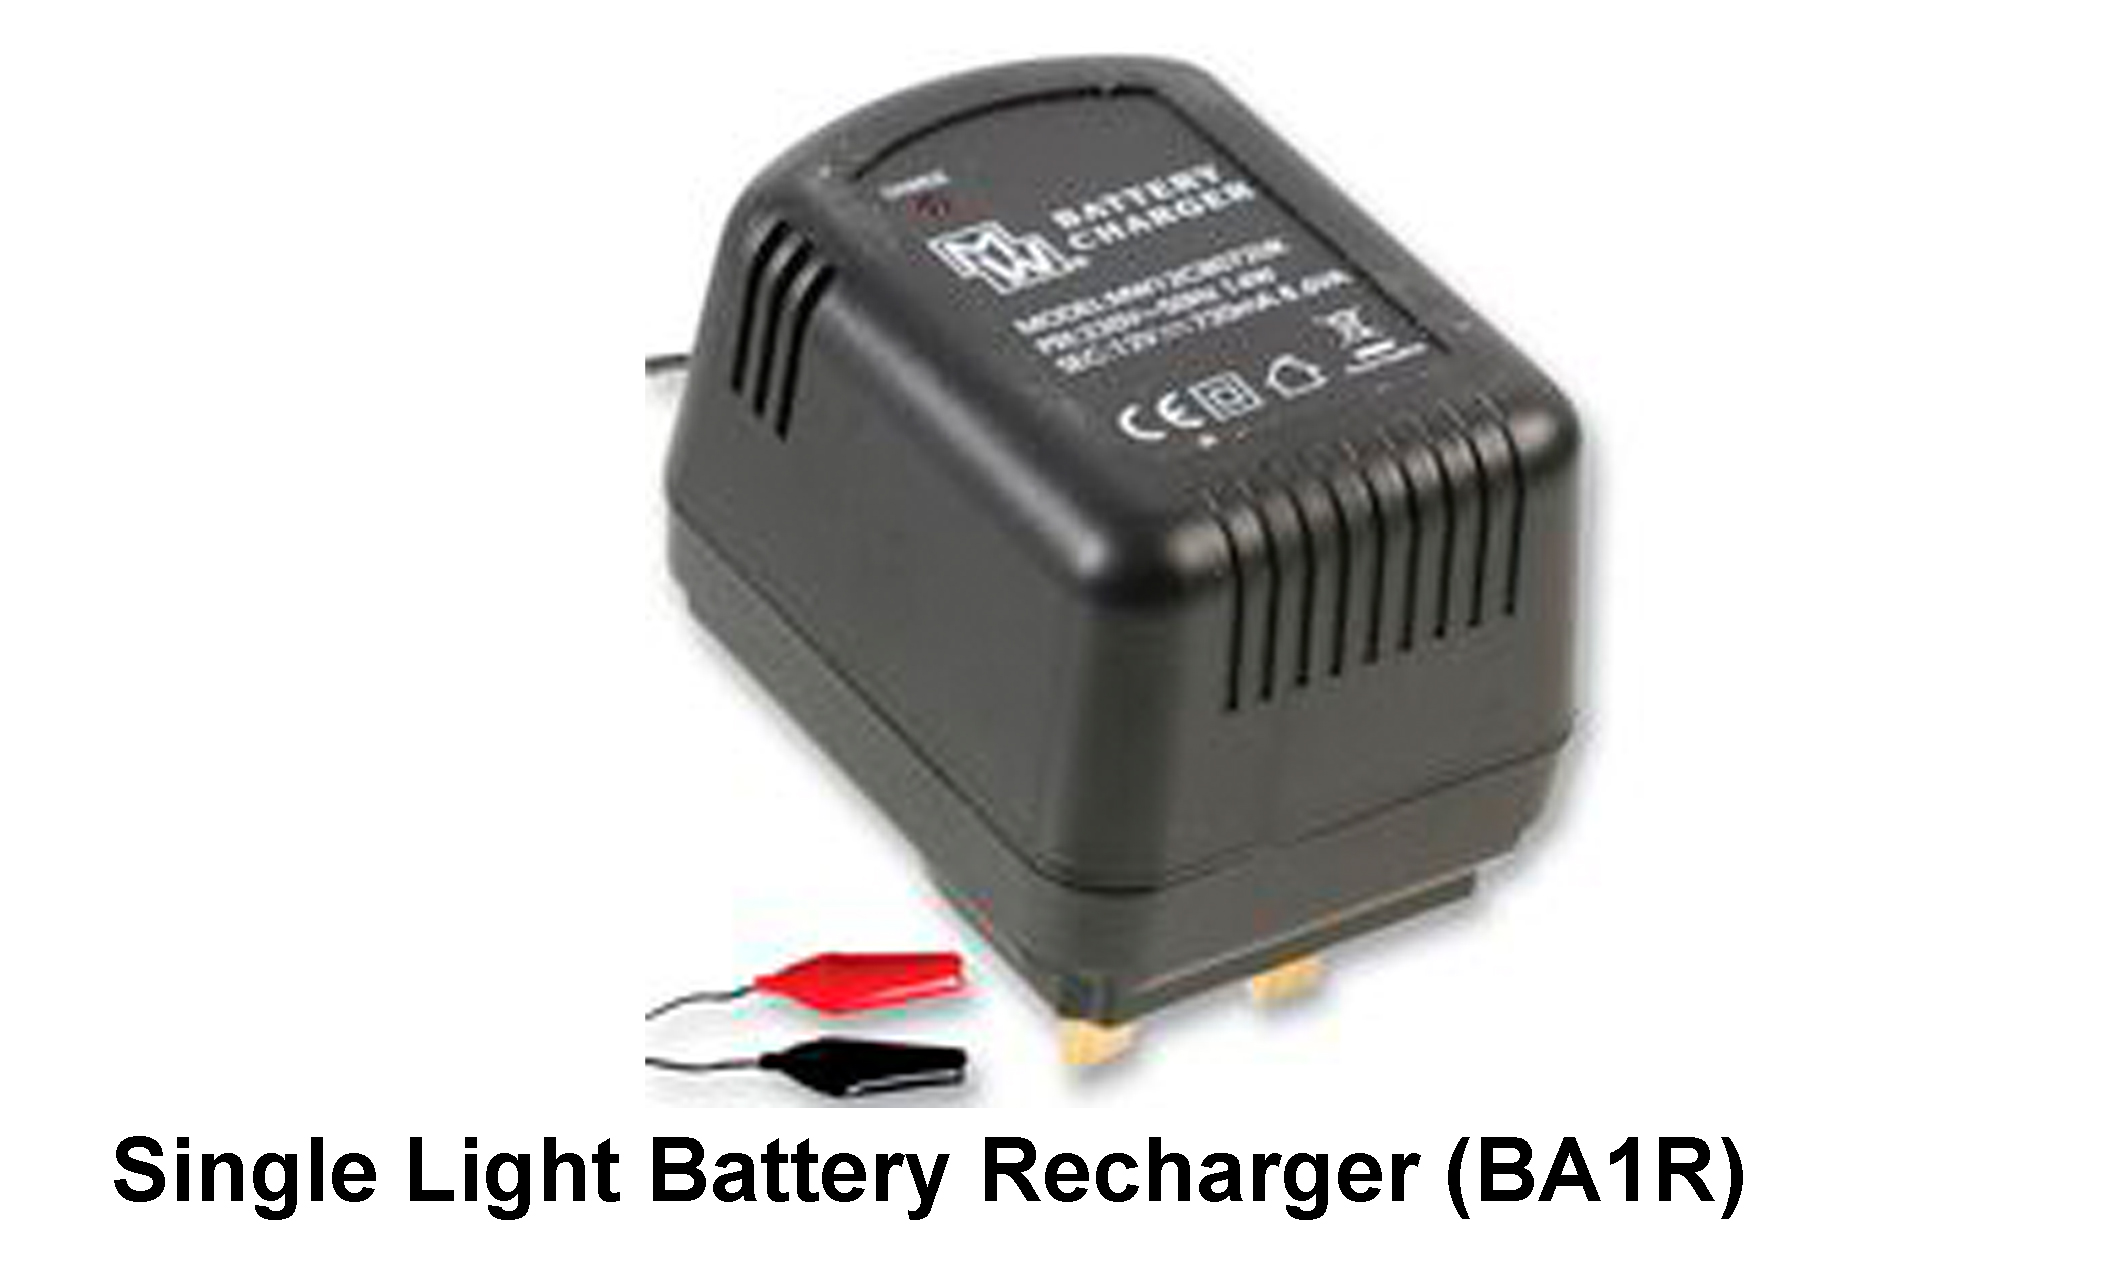 Single Light Battery Recharger